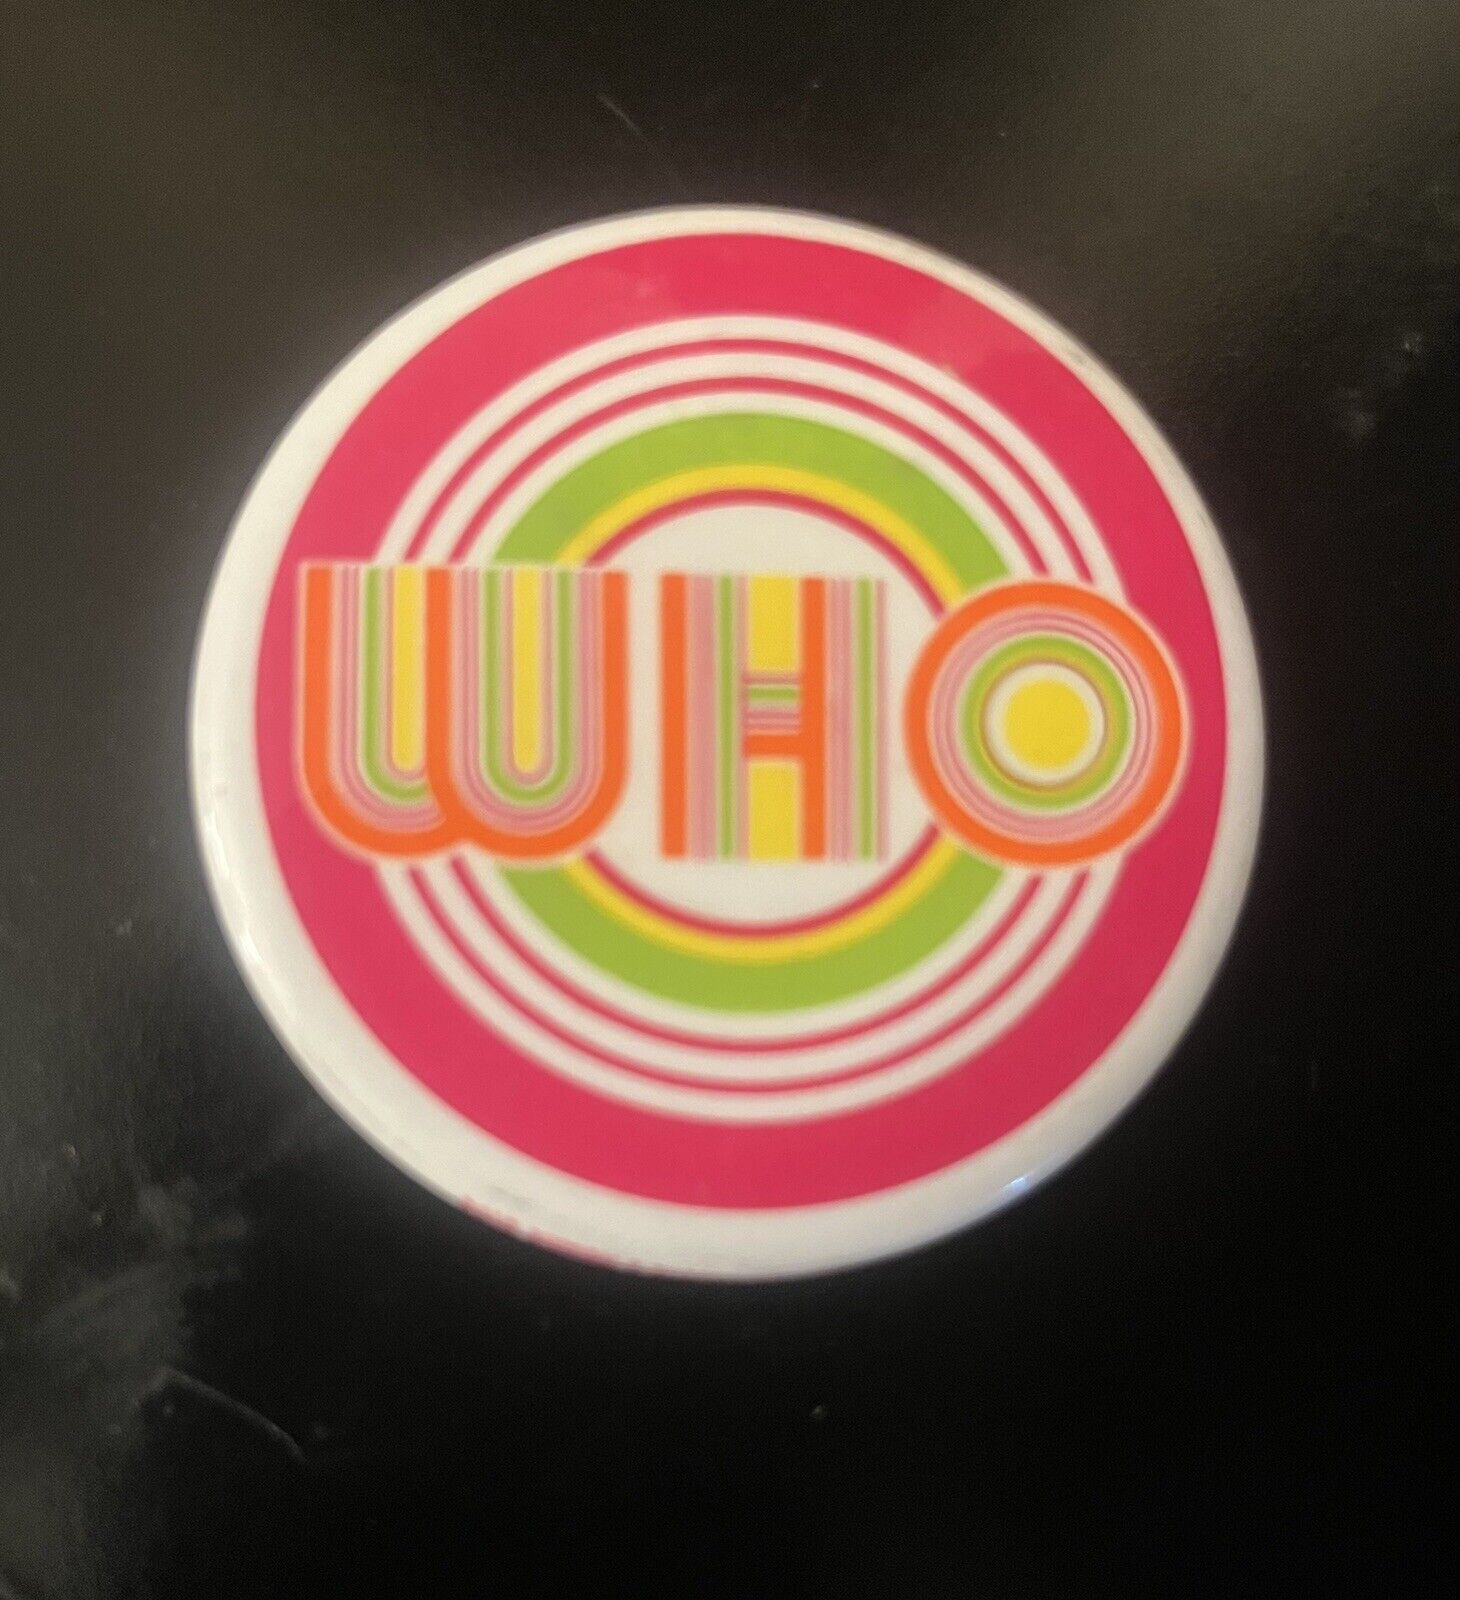 The WHO Button Size 2.5 Inches Vintage Circa 1970’s Mod Pinback Badge RARE